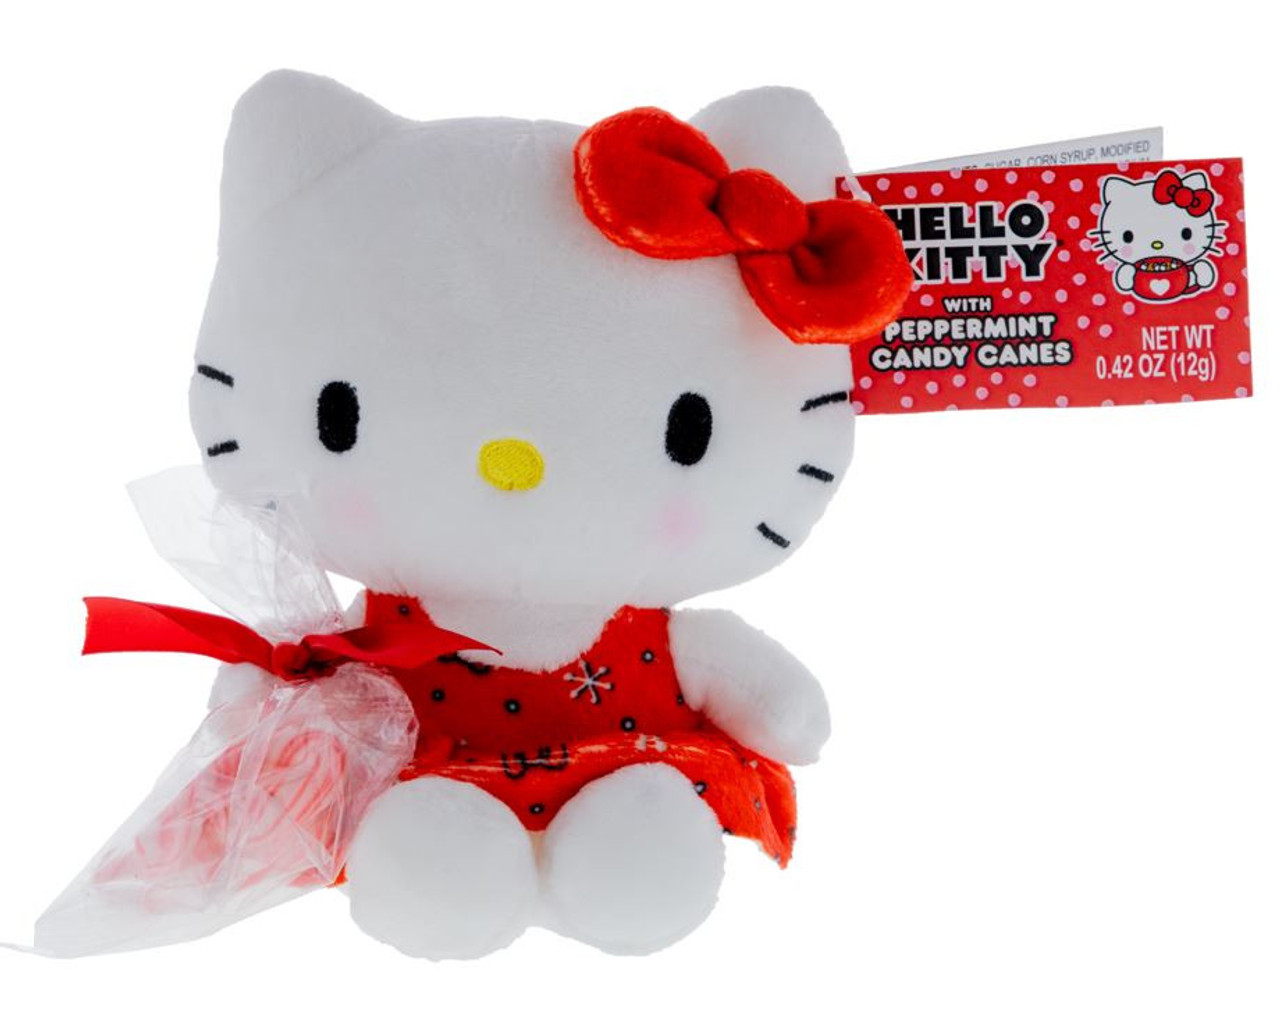 The future development of Hello Kitty plush插图